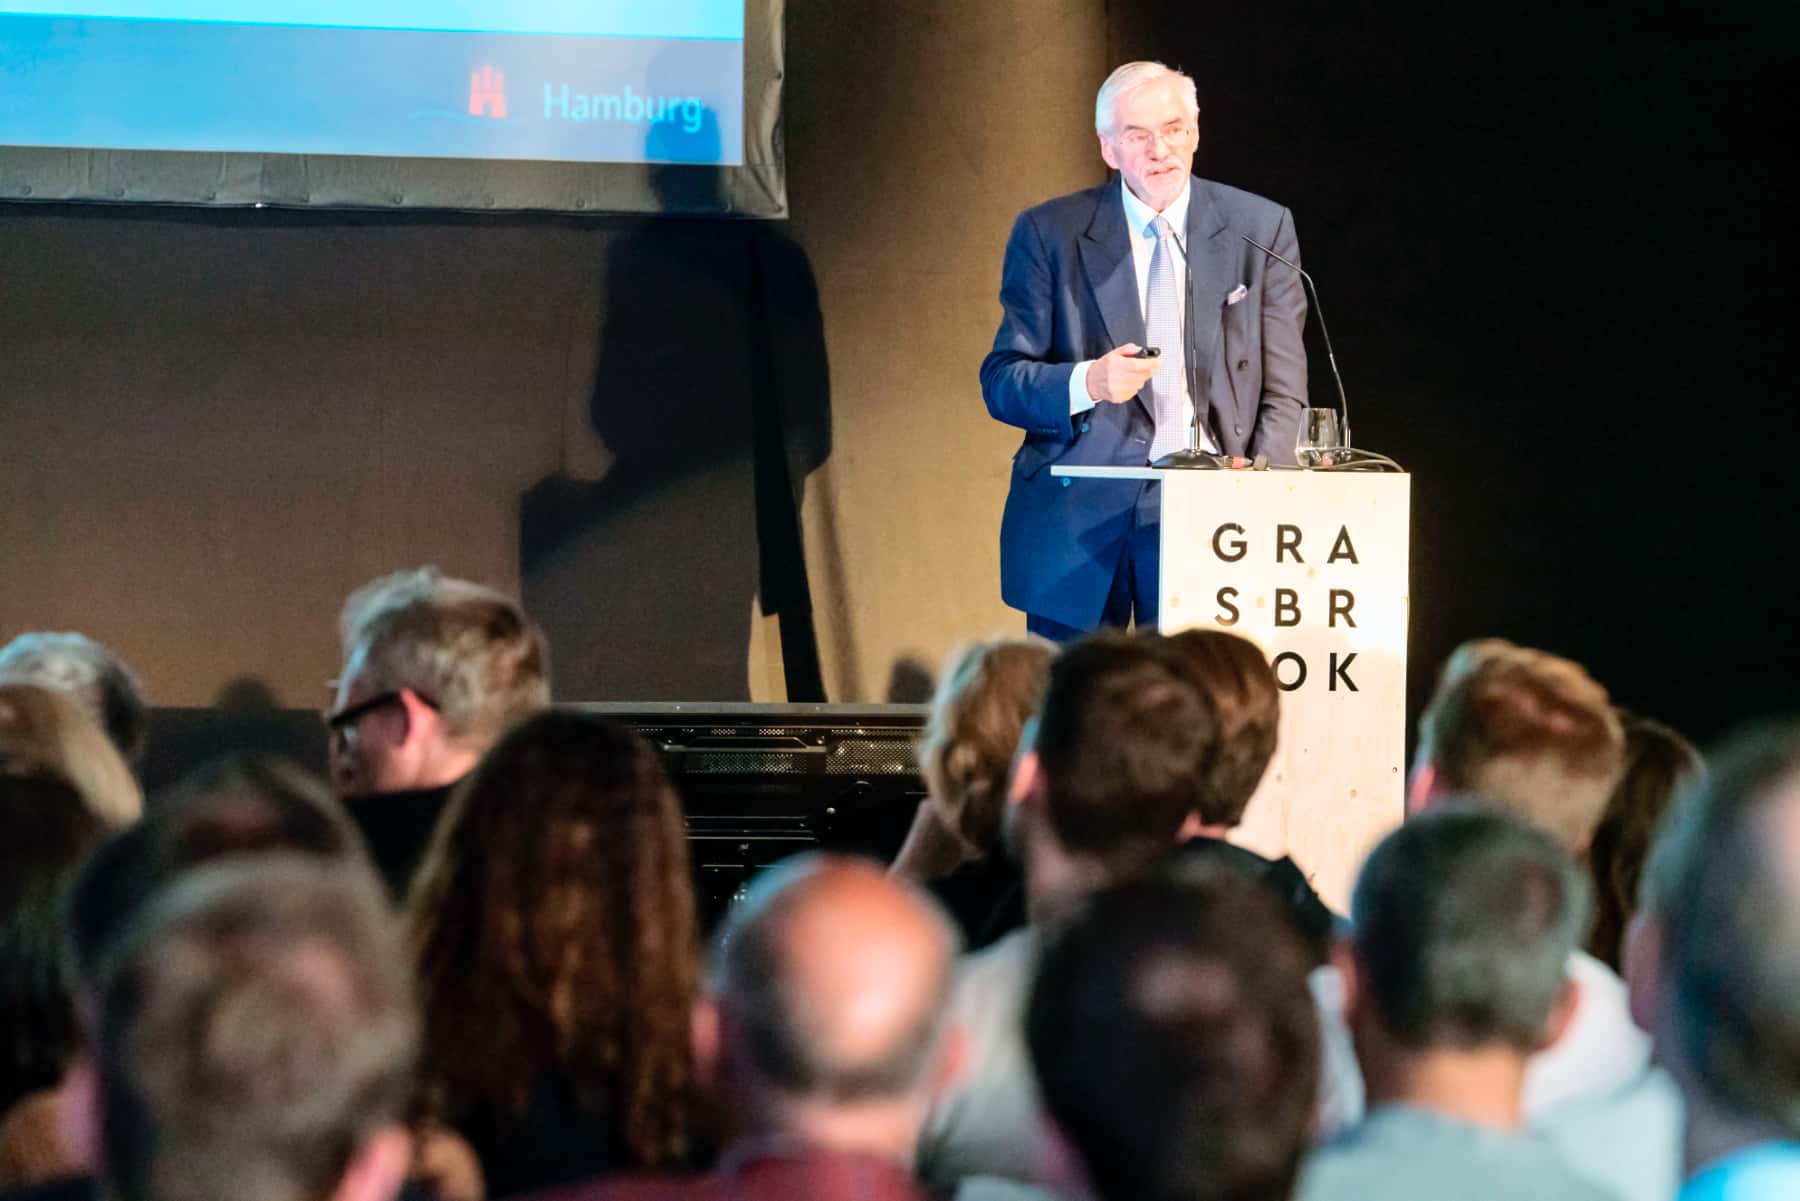 Mann (Jürgen Bruns-Berentelg) gibt Präsentation zum Grasbrook vor Publikum